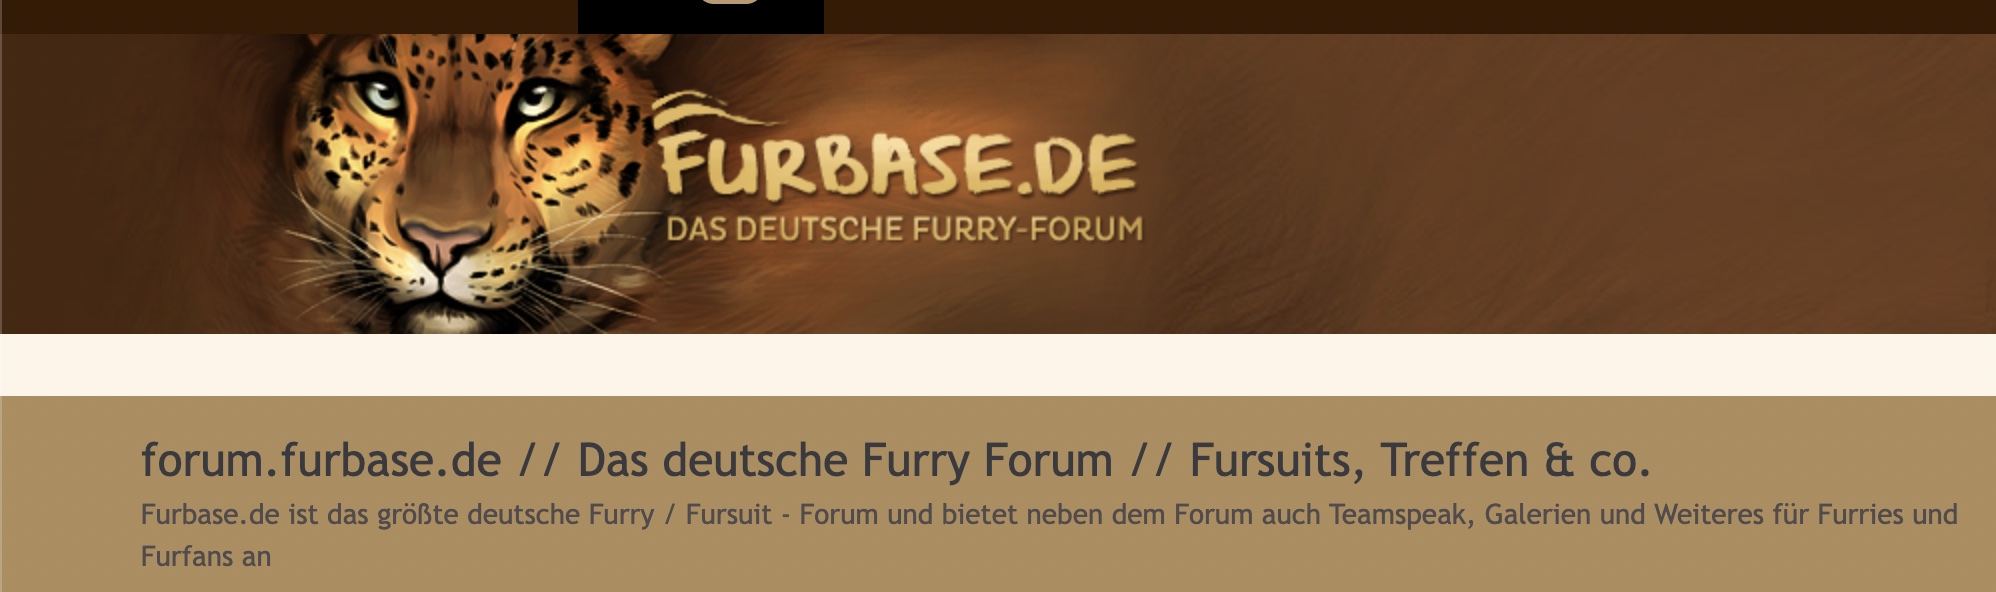 forum.furbase.de // Das deutsche Furry Forum // Fursuits, Treffen & co.